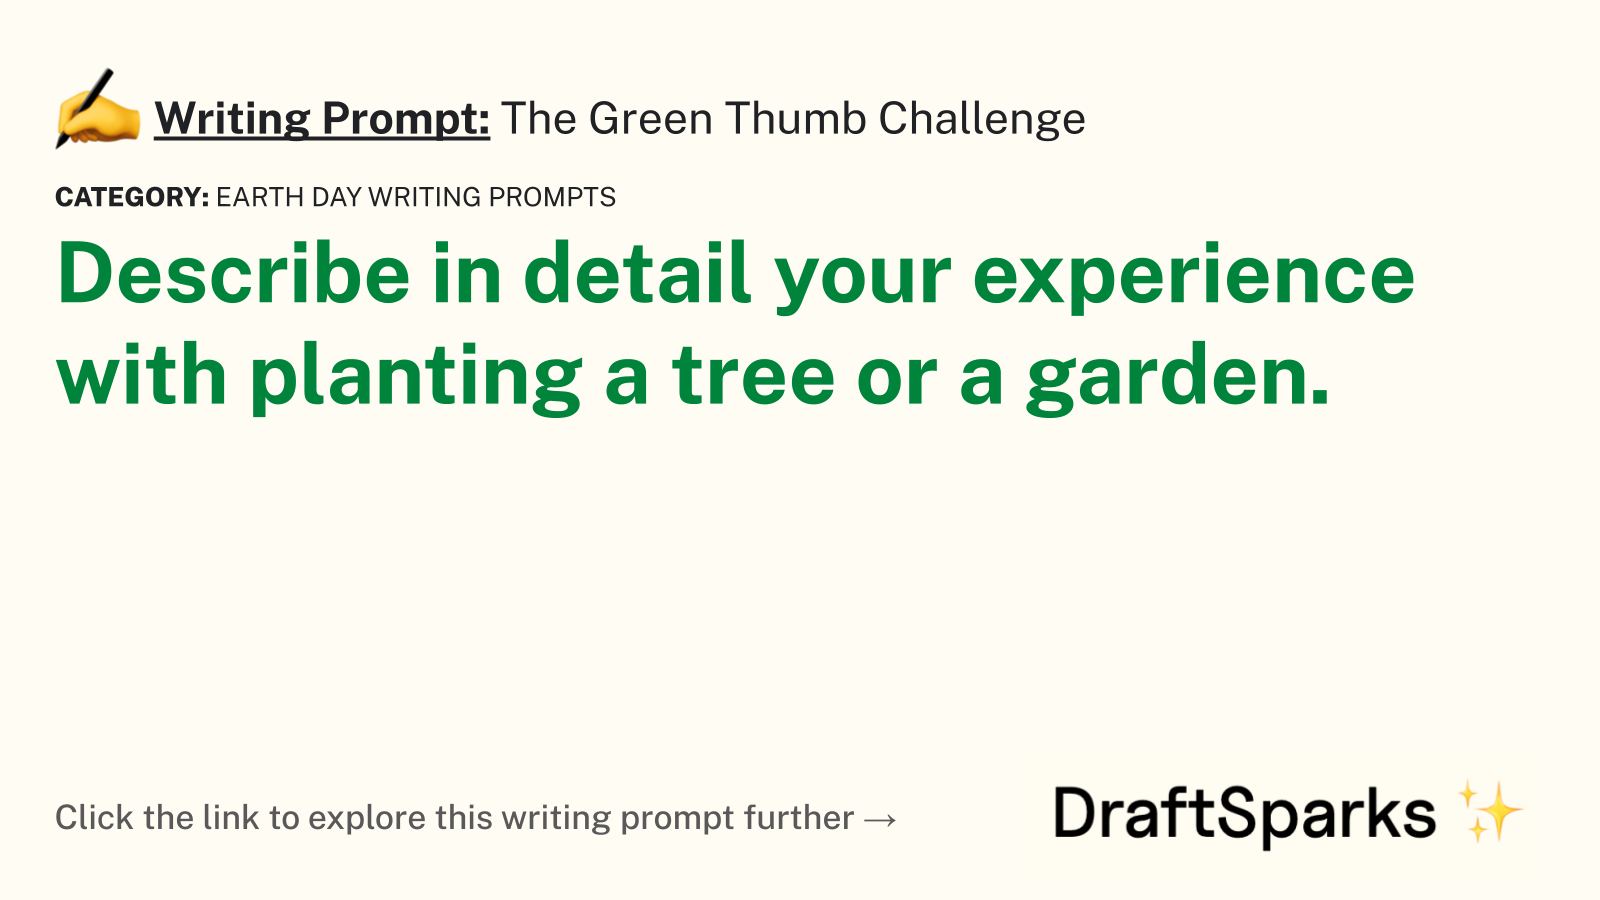 The Green Thumb Challenge